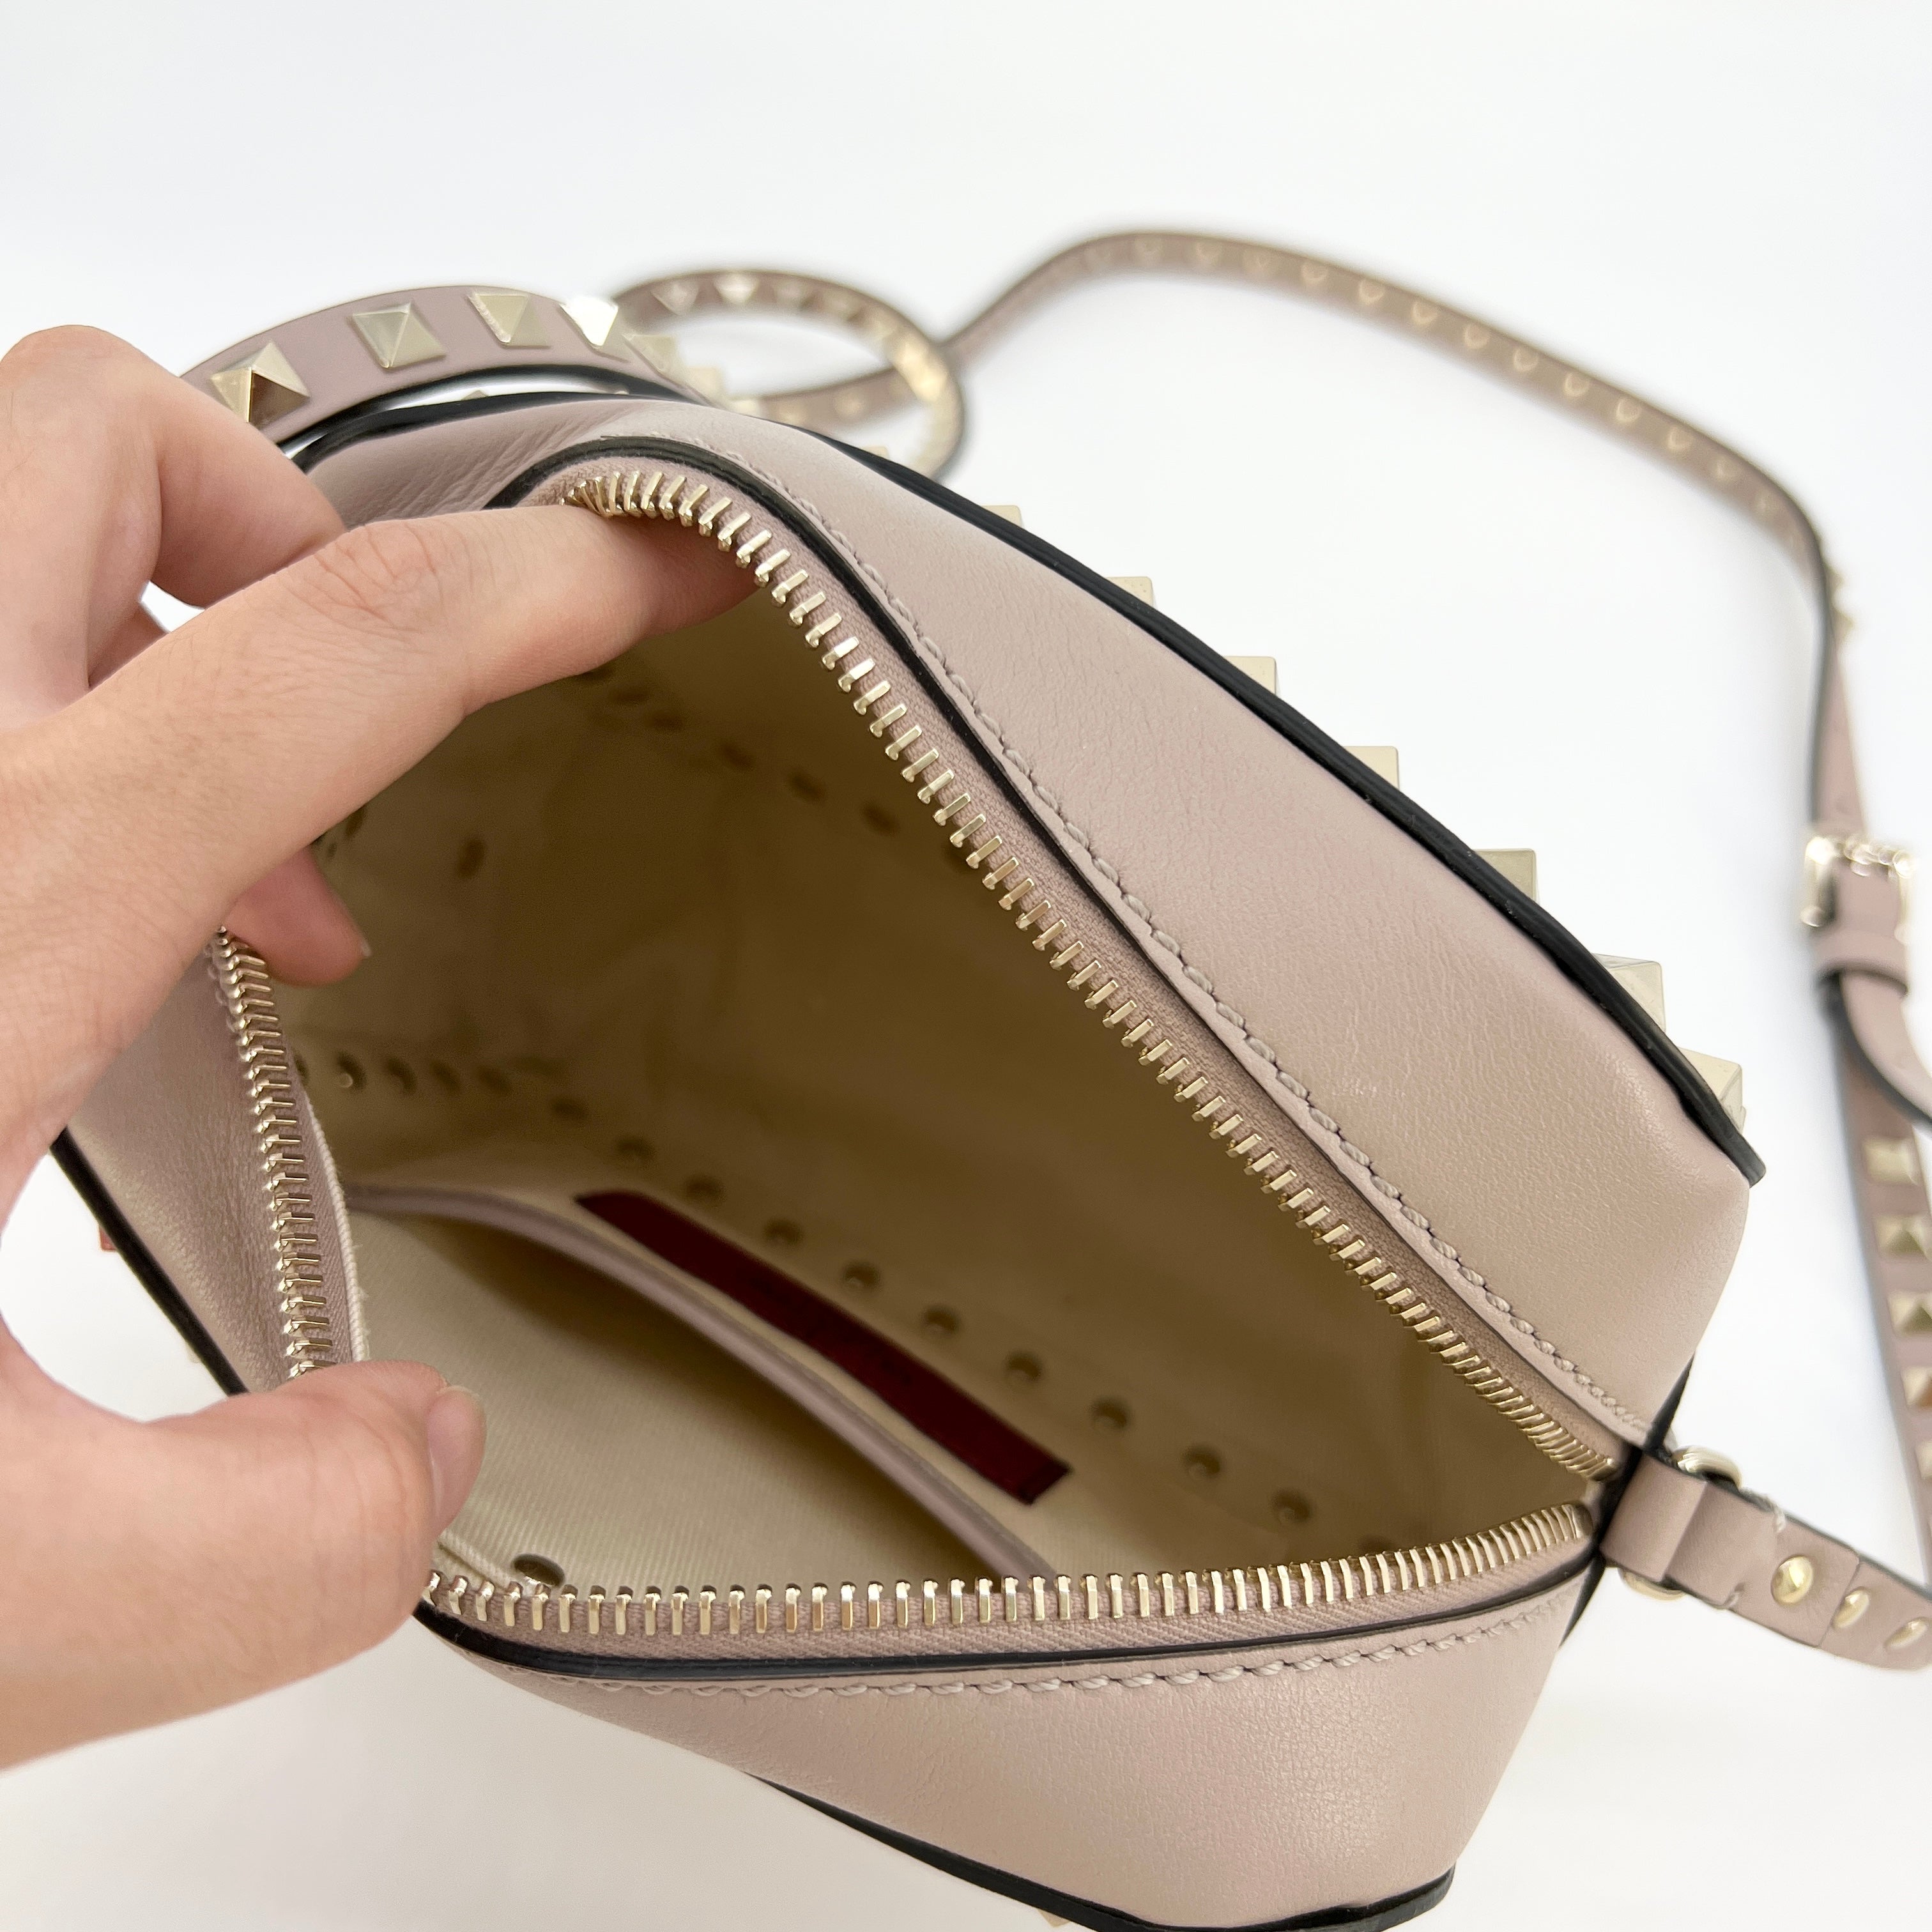 Valentino 100% Leather Handbags